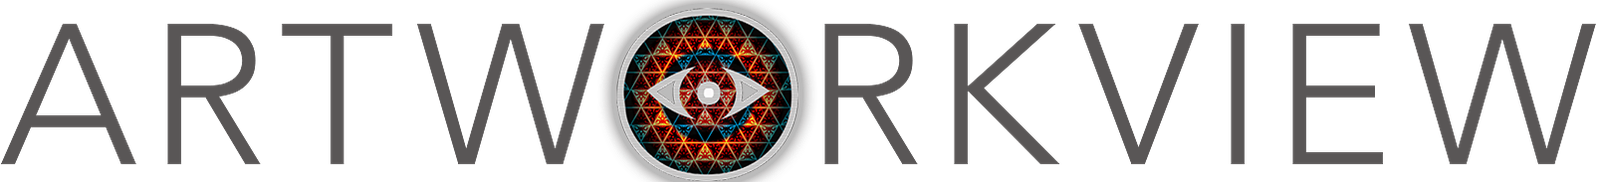 logo-artworrkview